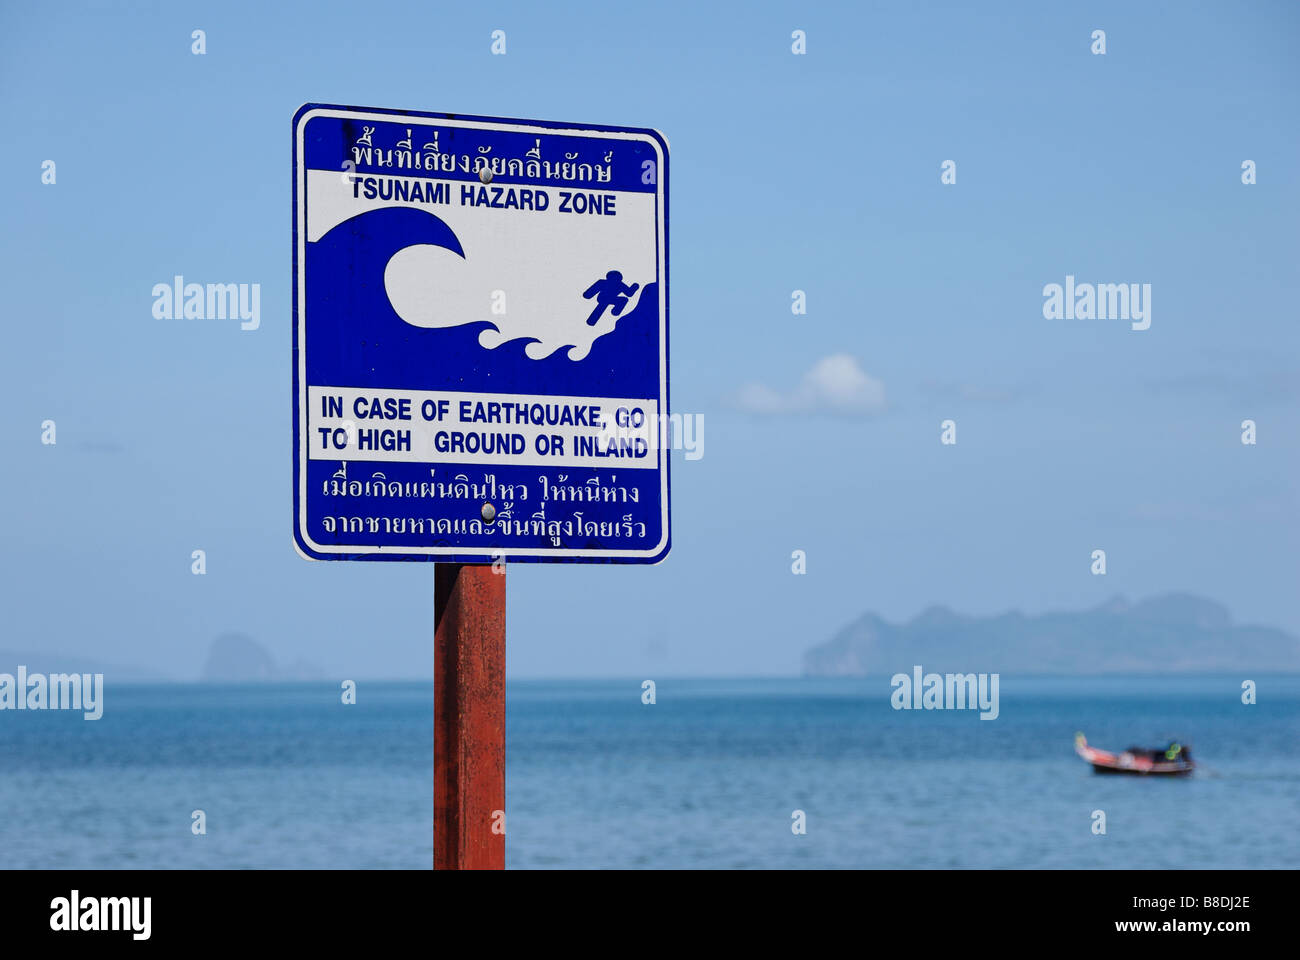 Tsunami hazard zone sign on Koh Libong island Thailand Stock Photo